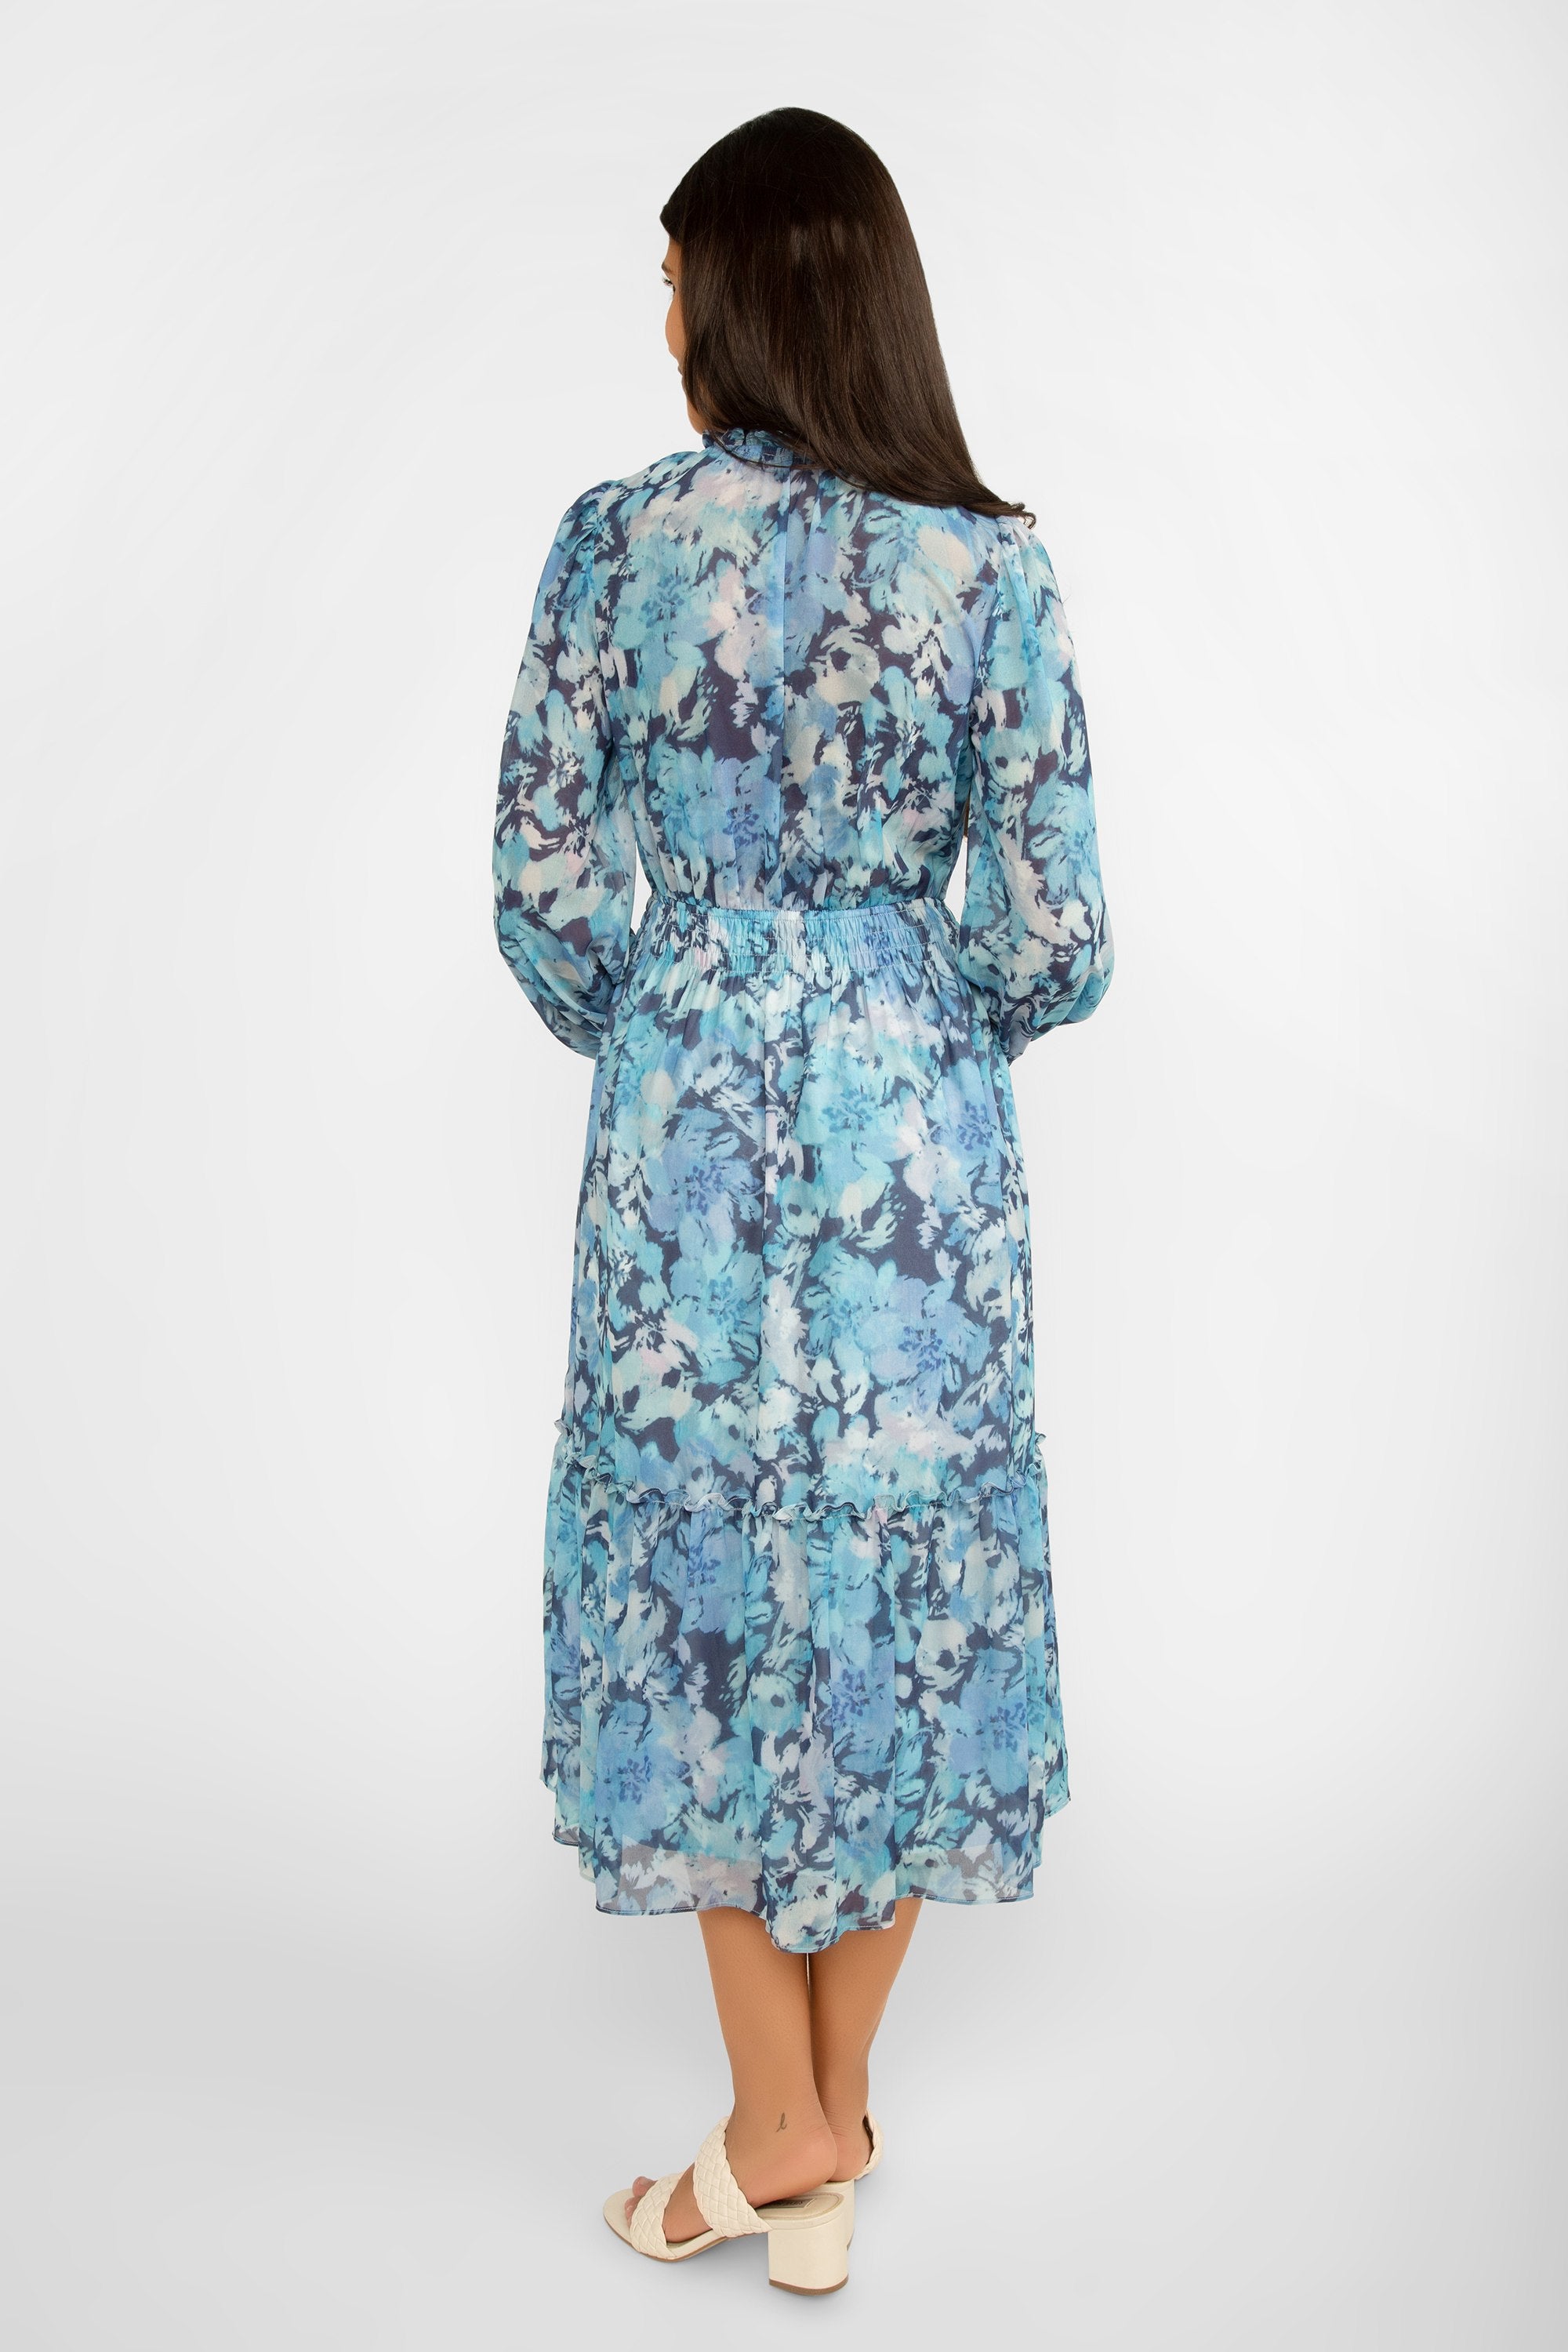 Lucy Paris (DR2100) Women's Long Sleeve Blue Printed Chiffon Midi Dress